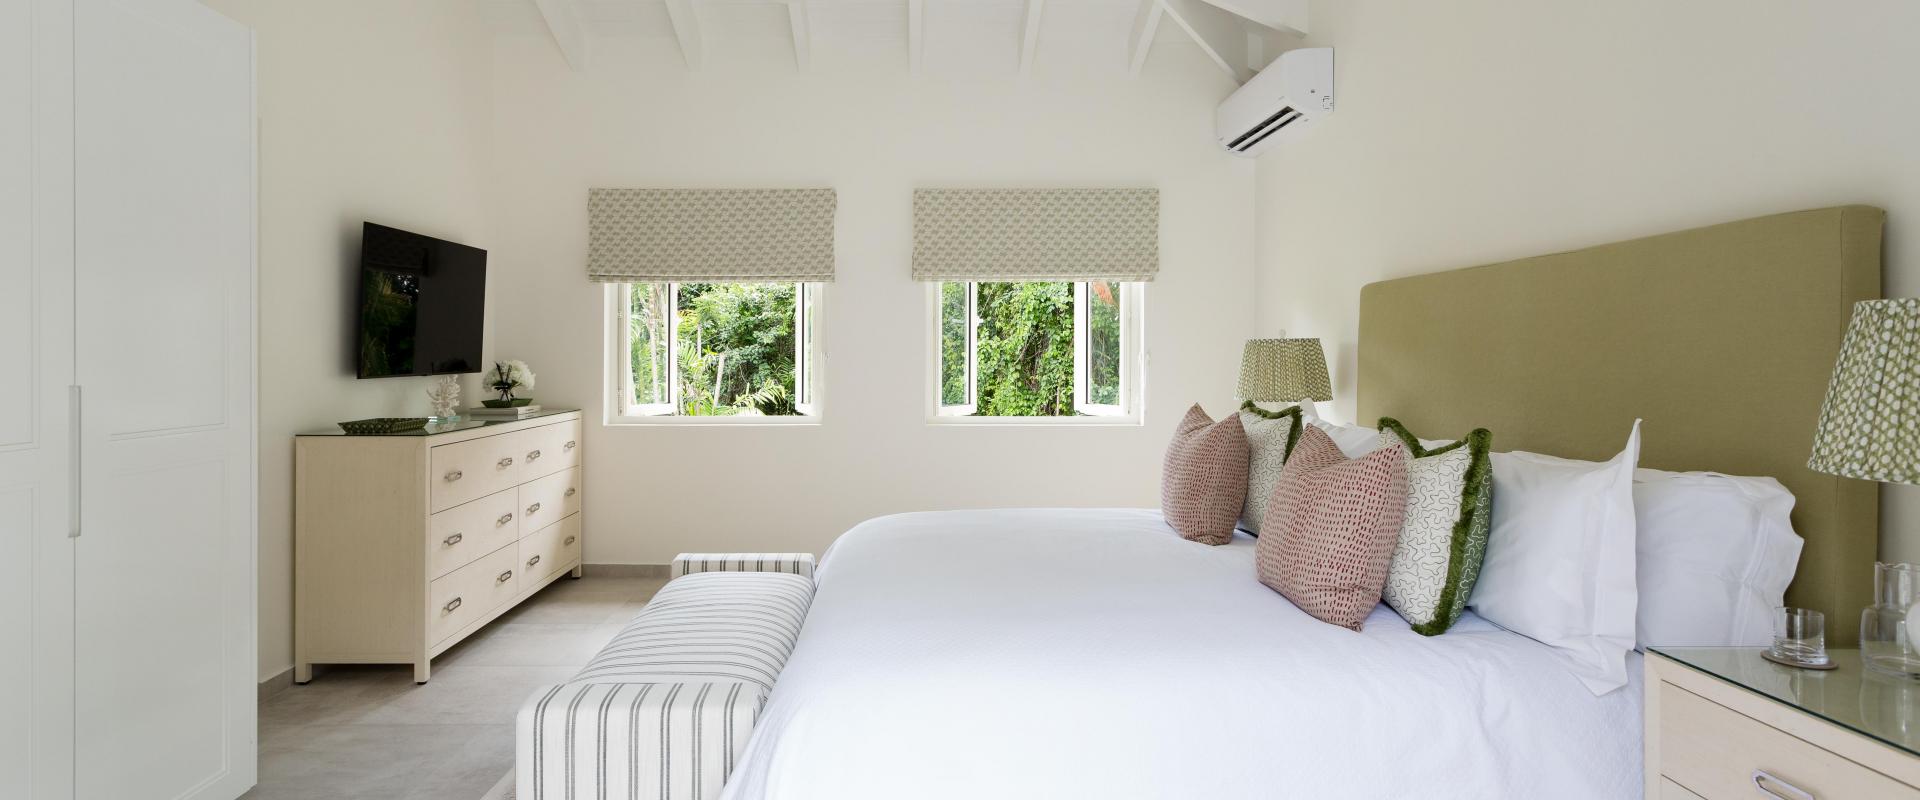 Sandy Lane, Horizons House/Villa For Rent in Barbados